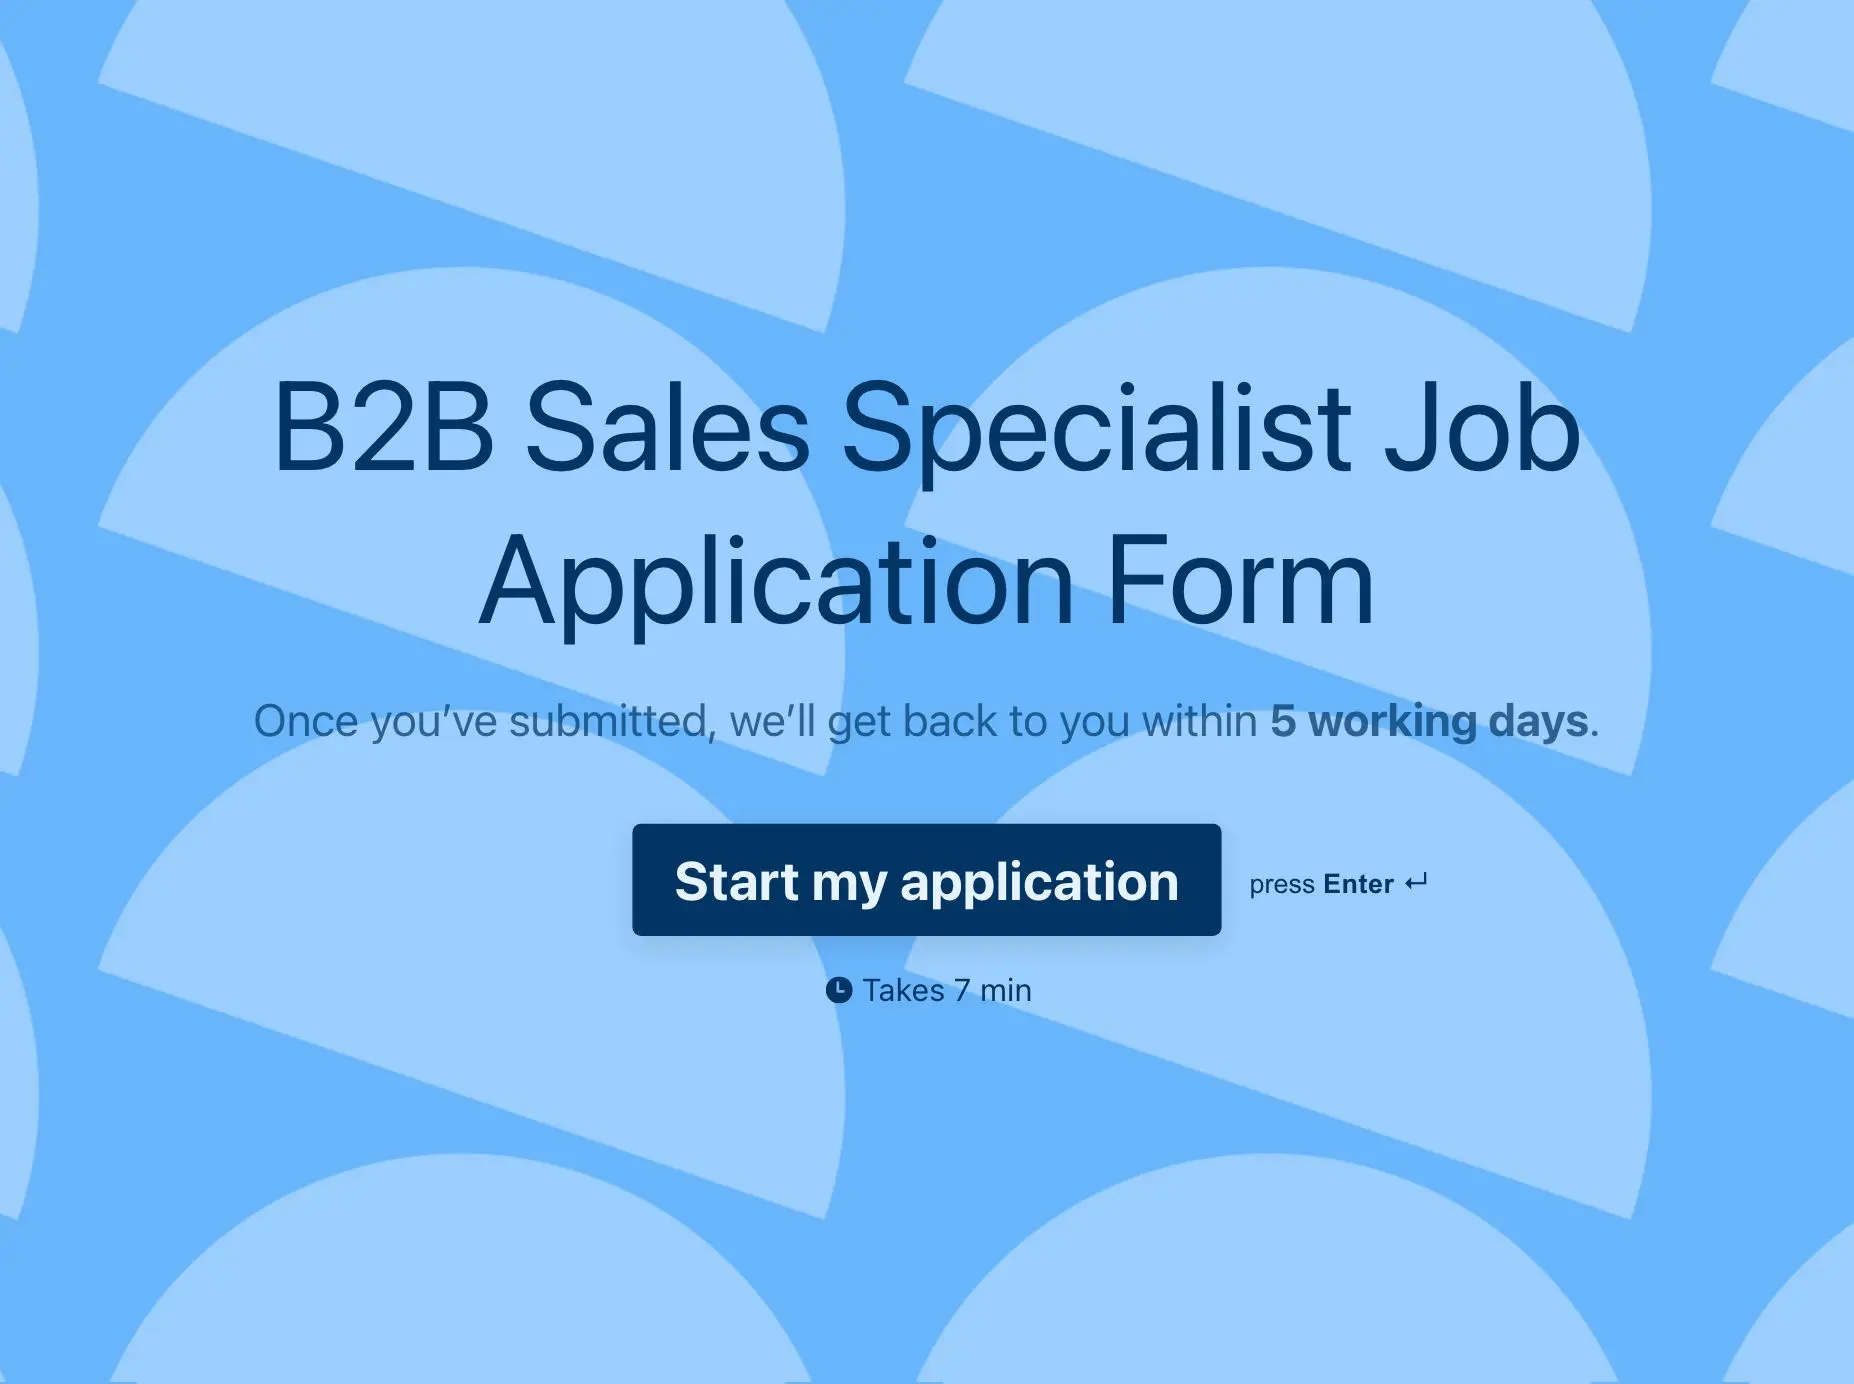 B2B Sales Specialist Job Application Form Template Hero